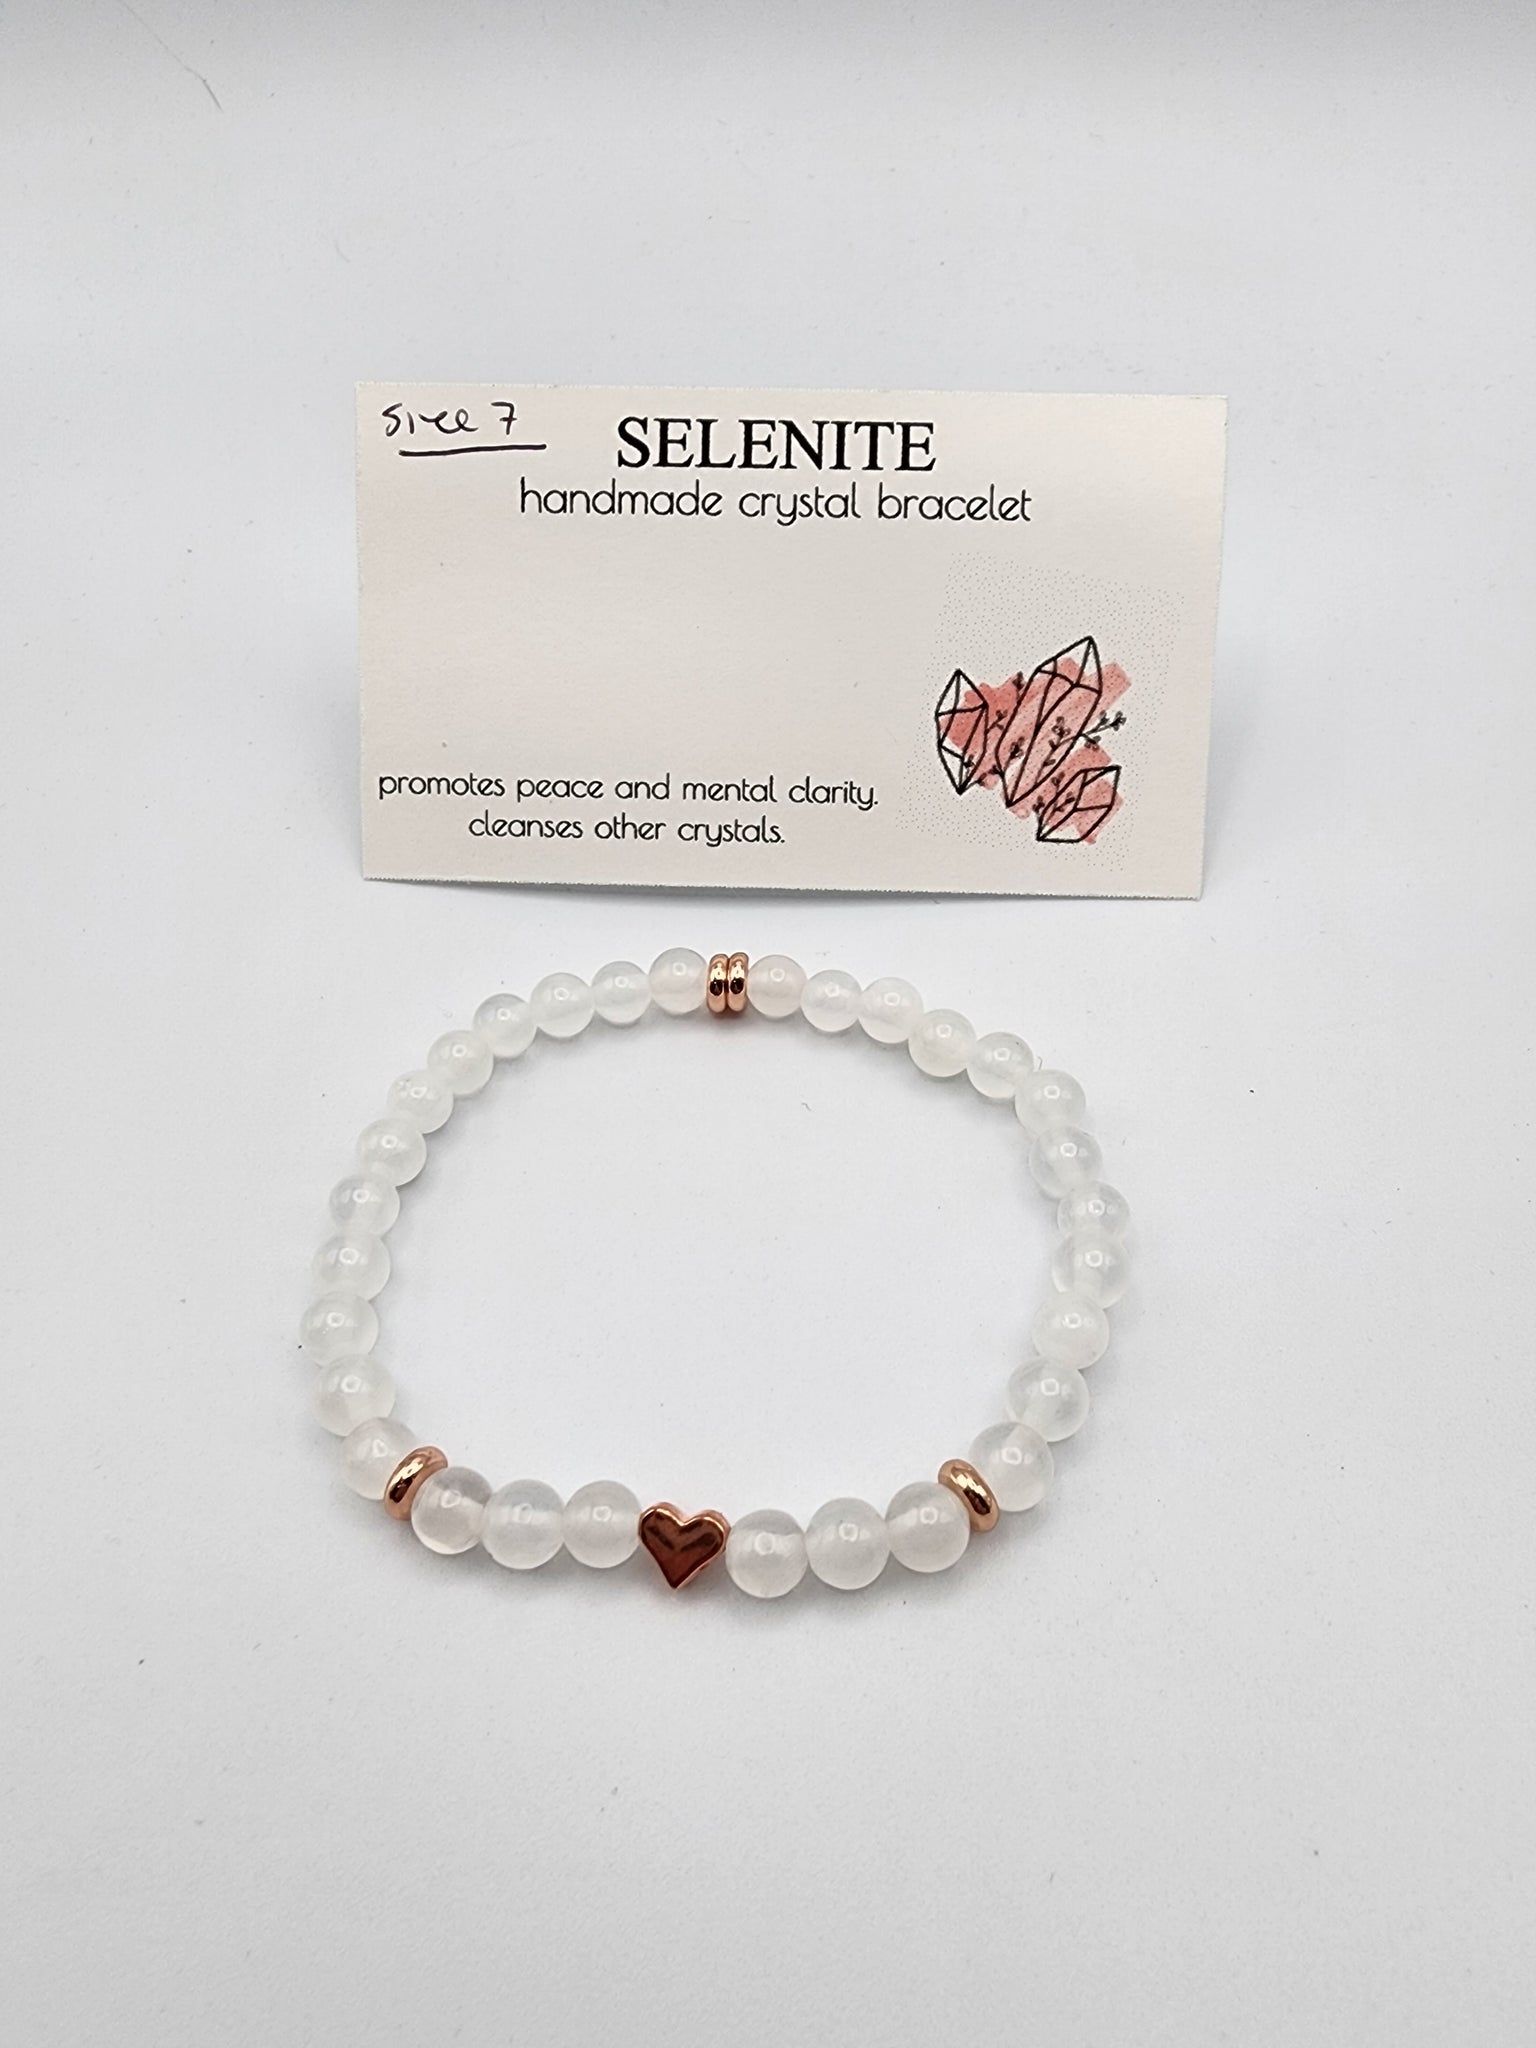 Crystal bracelet - Selenite